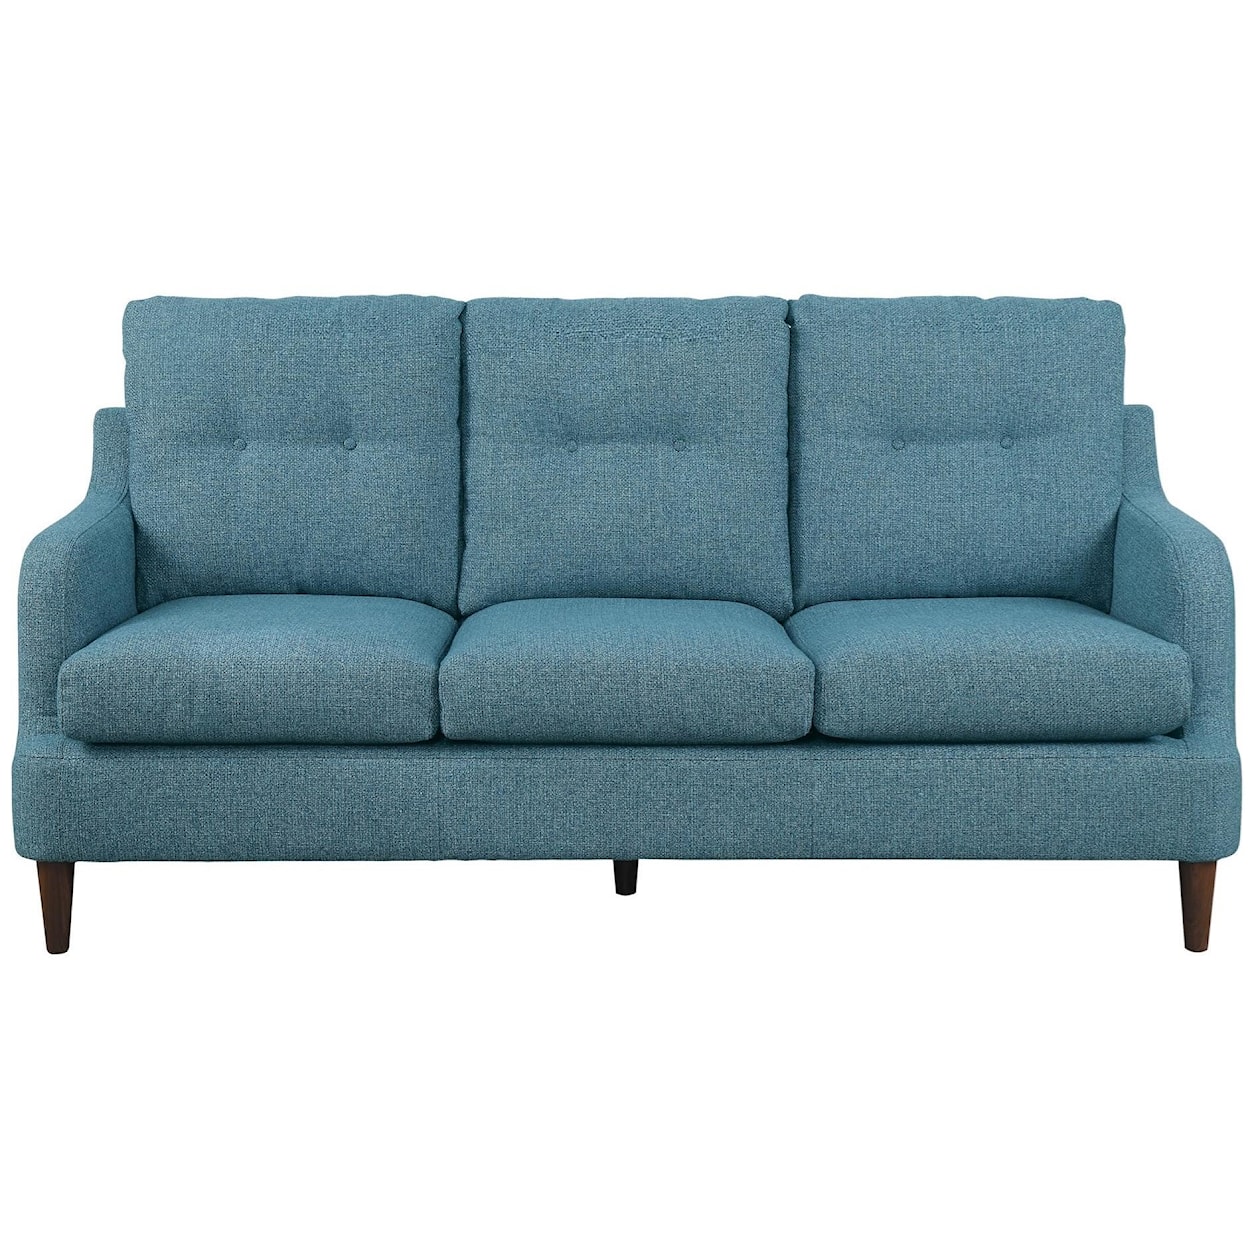 Homelegance Furniture Cagle Sofa